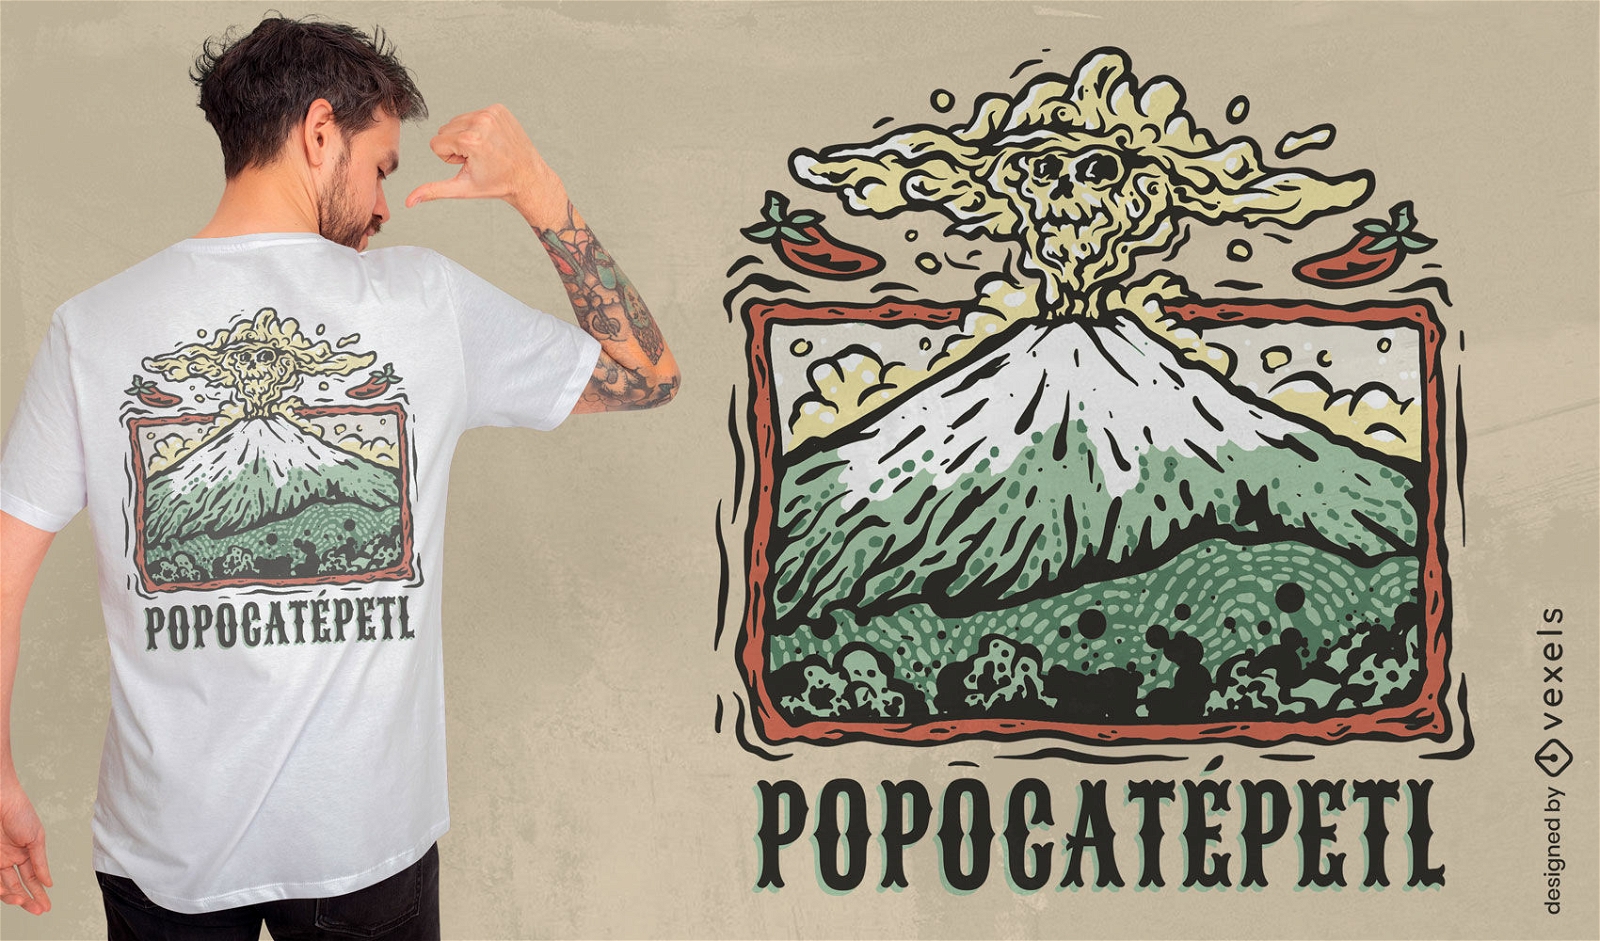 Mexican volcano erupting t-shirt design